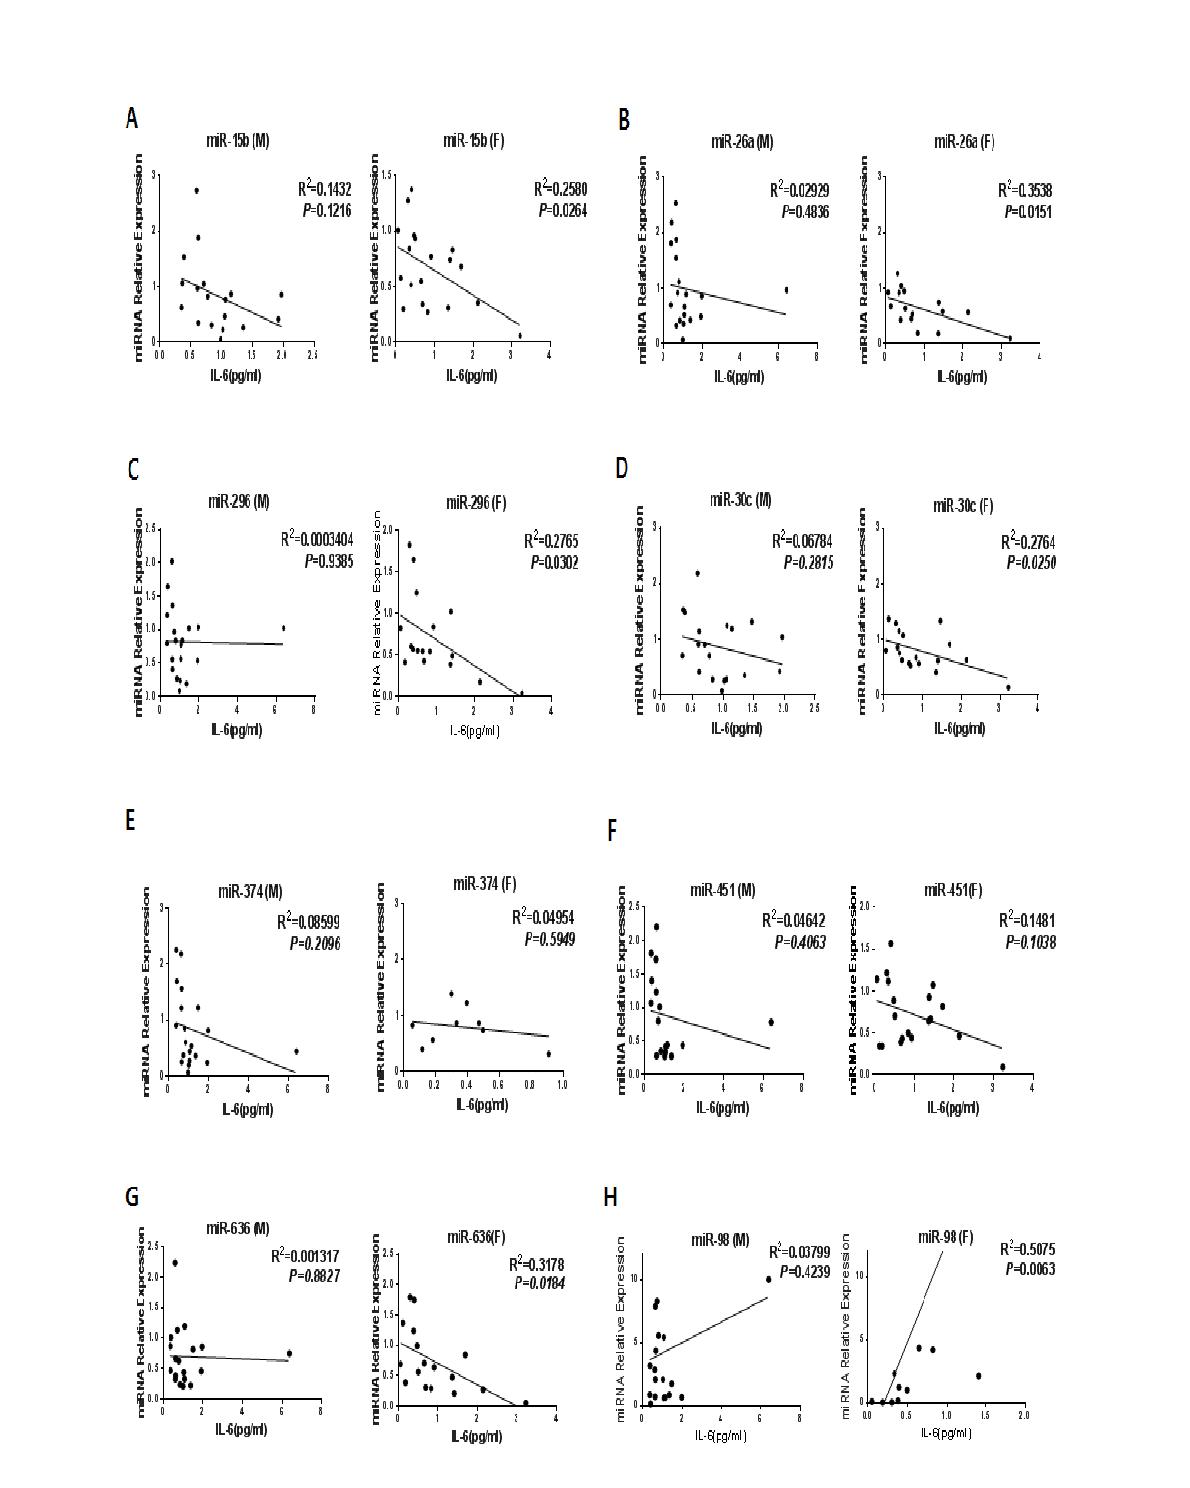 Sex-specific correlation between circulating miRNAs and IL-6.